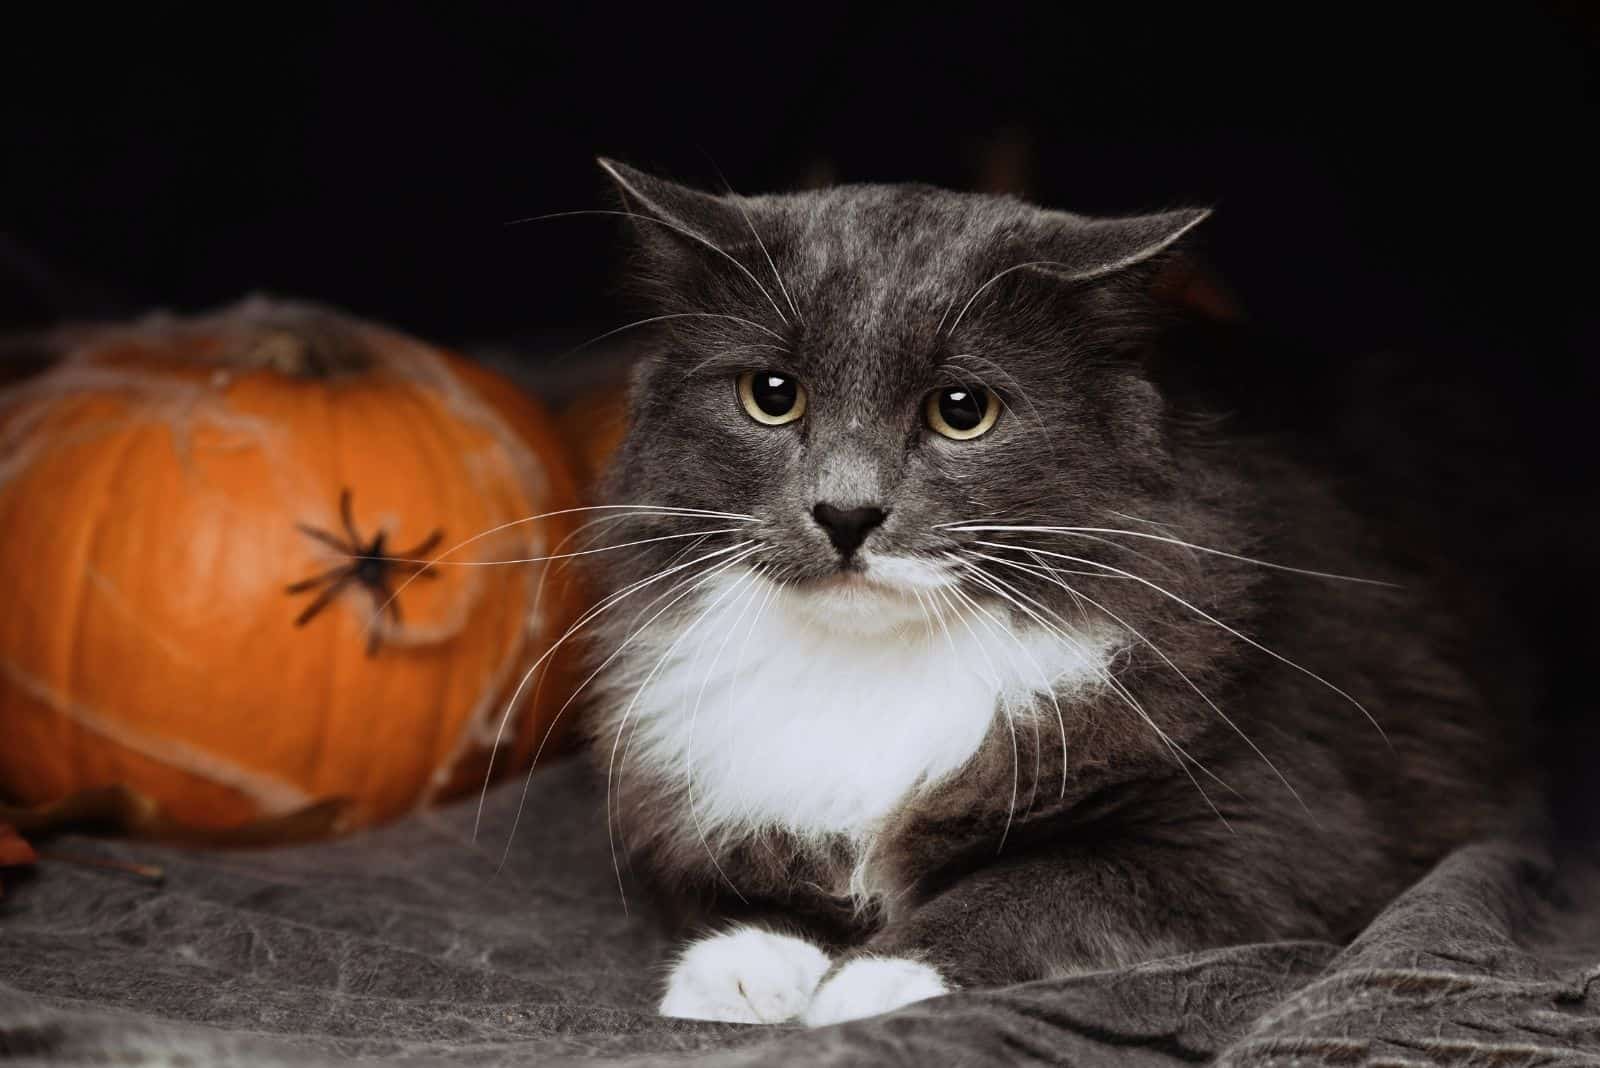 portrait of a cat next to a pumpkin